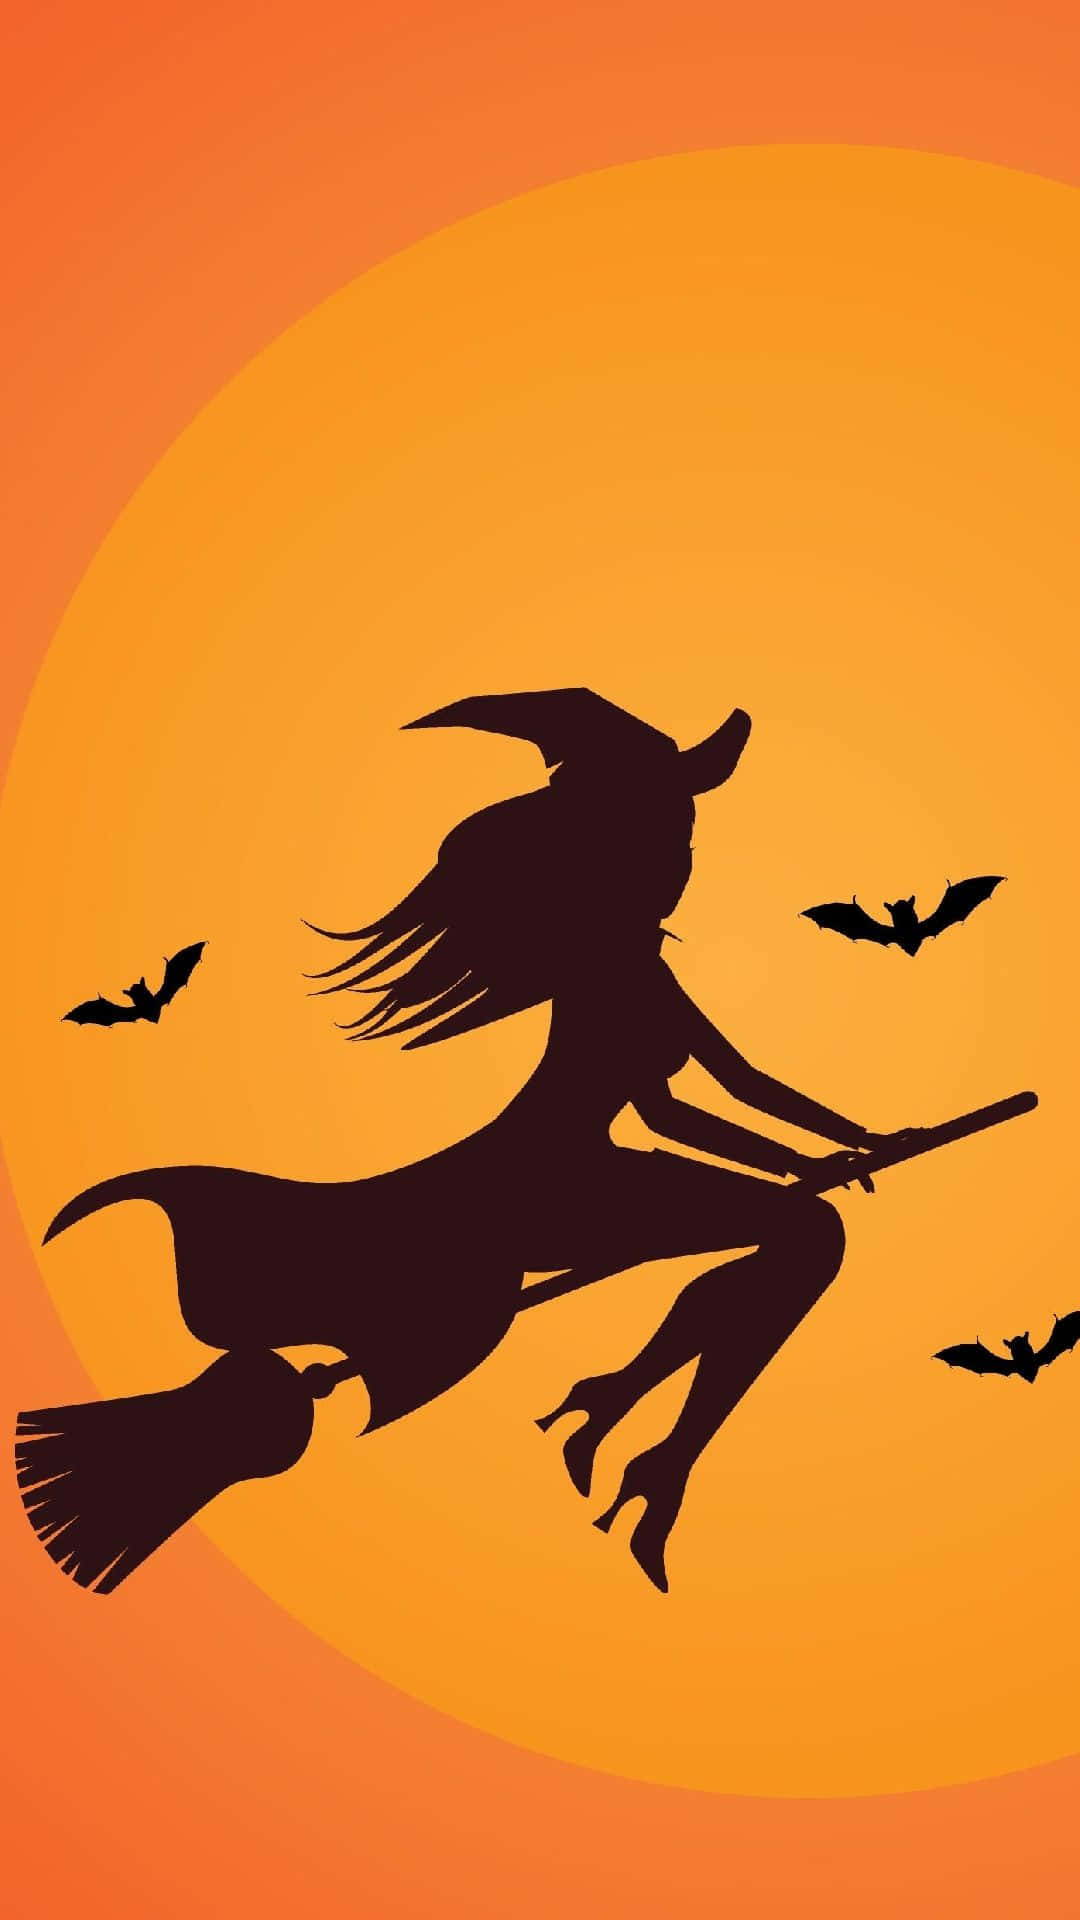 Sumérgeteen El Espíritu De Halloween Con Esta Estética De Brujas Escalofriante Fondo de pantalla